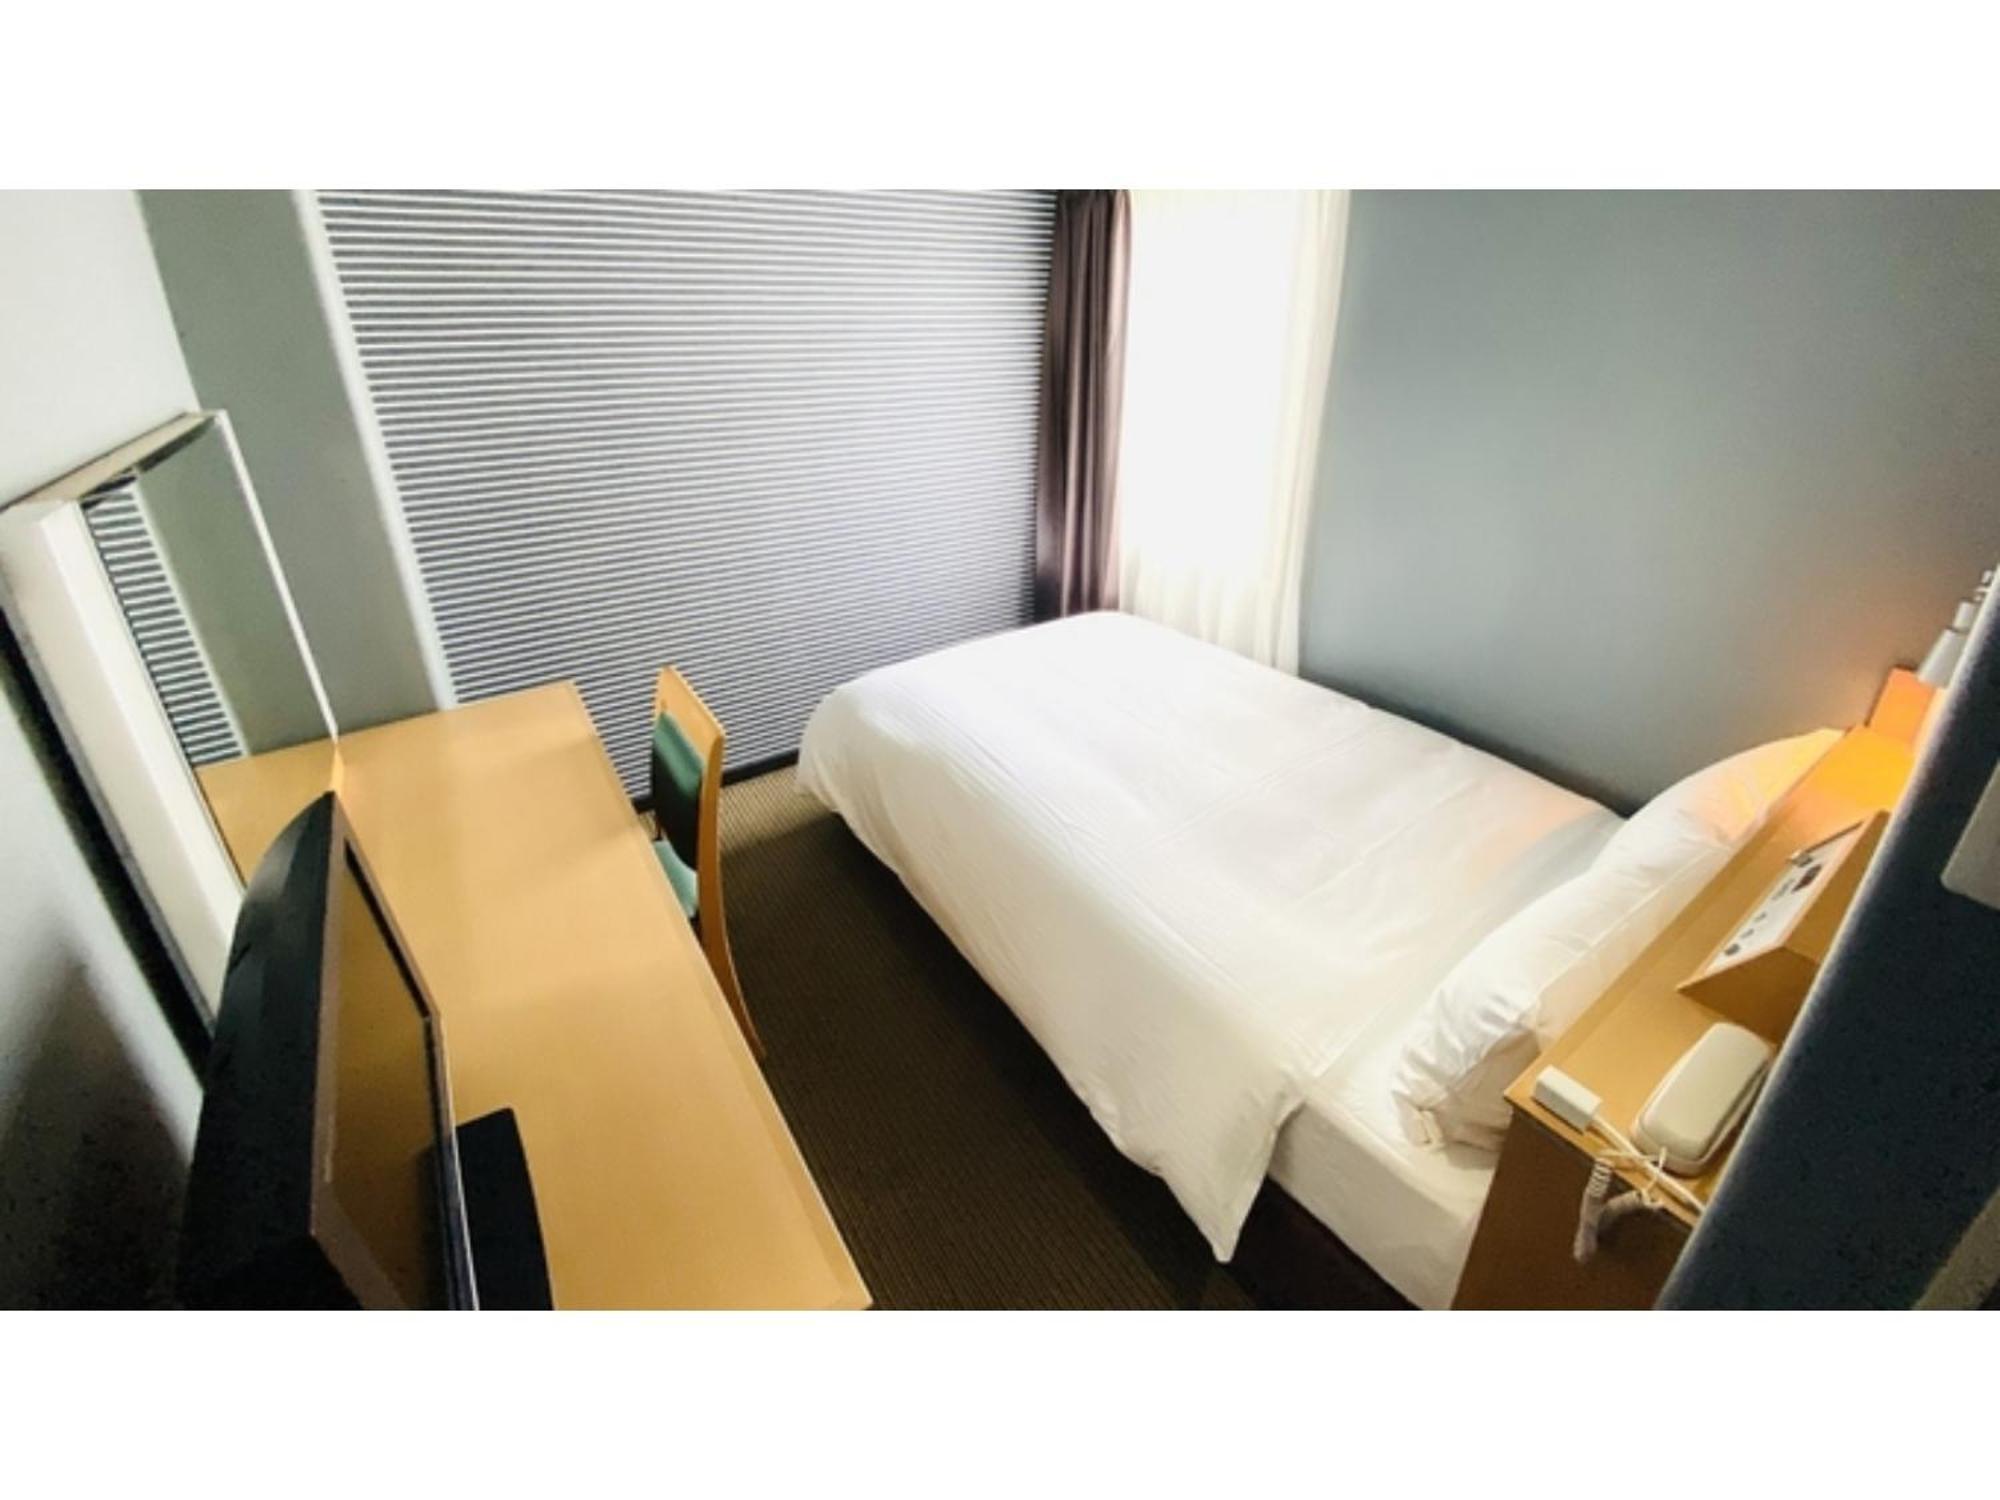 Valie Hotel Hiroshima - Vacation Stay 50699V 外观 照片